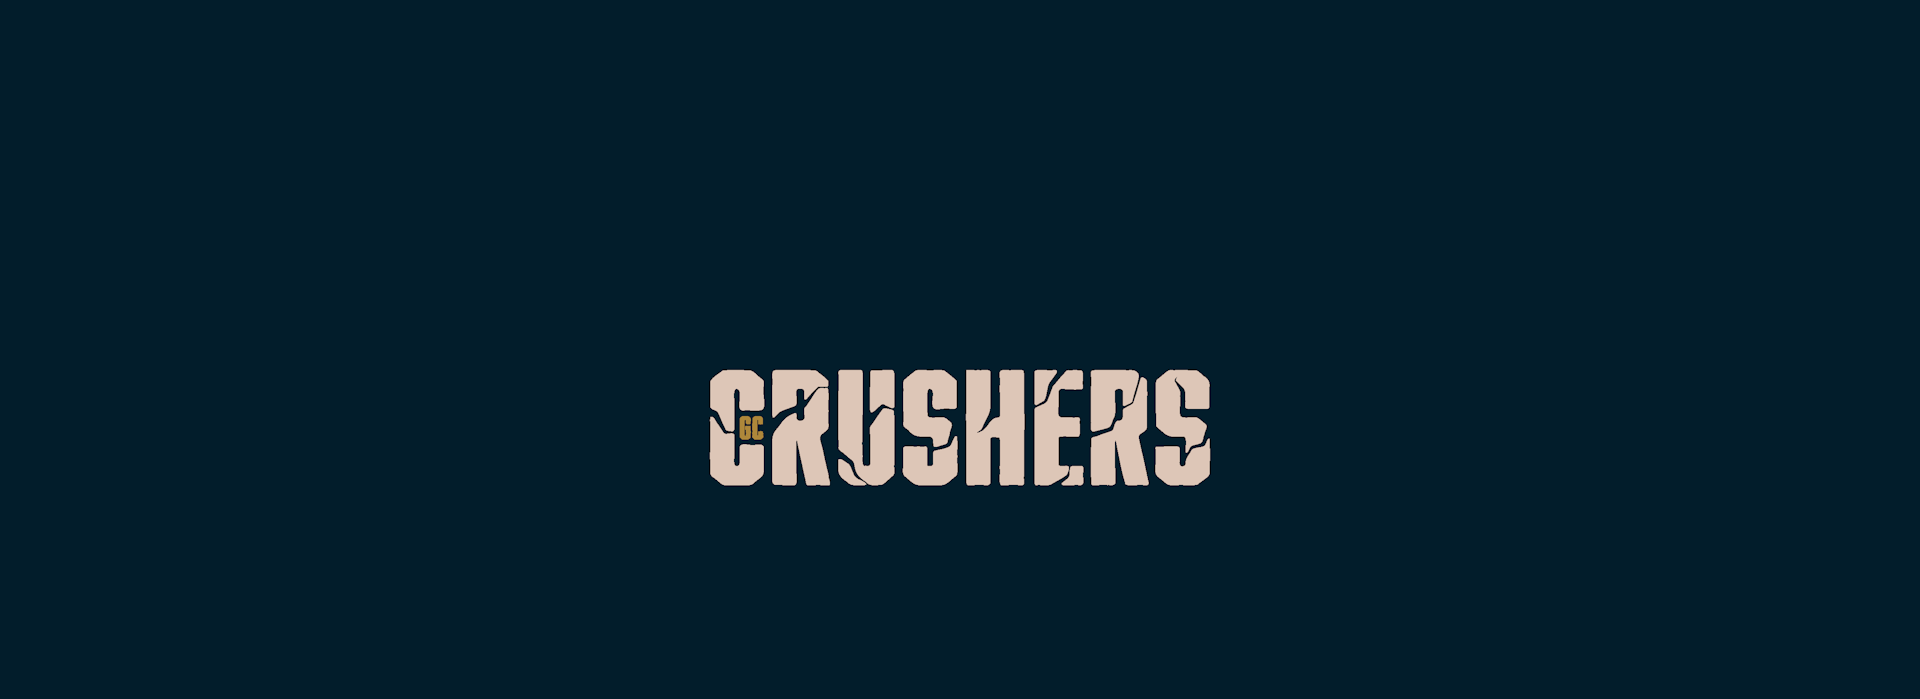 Crushers-GC Wordmark